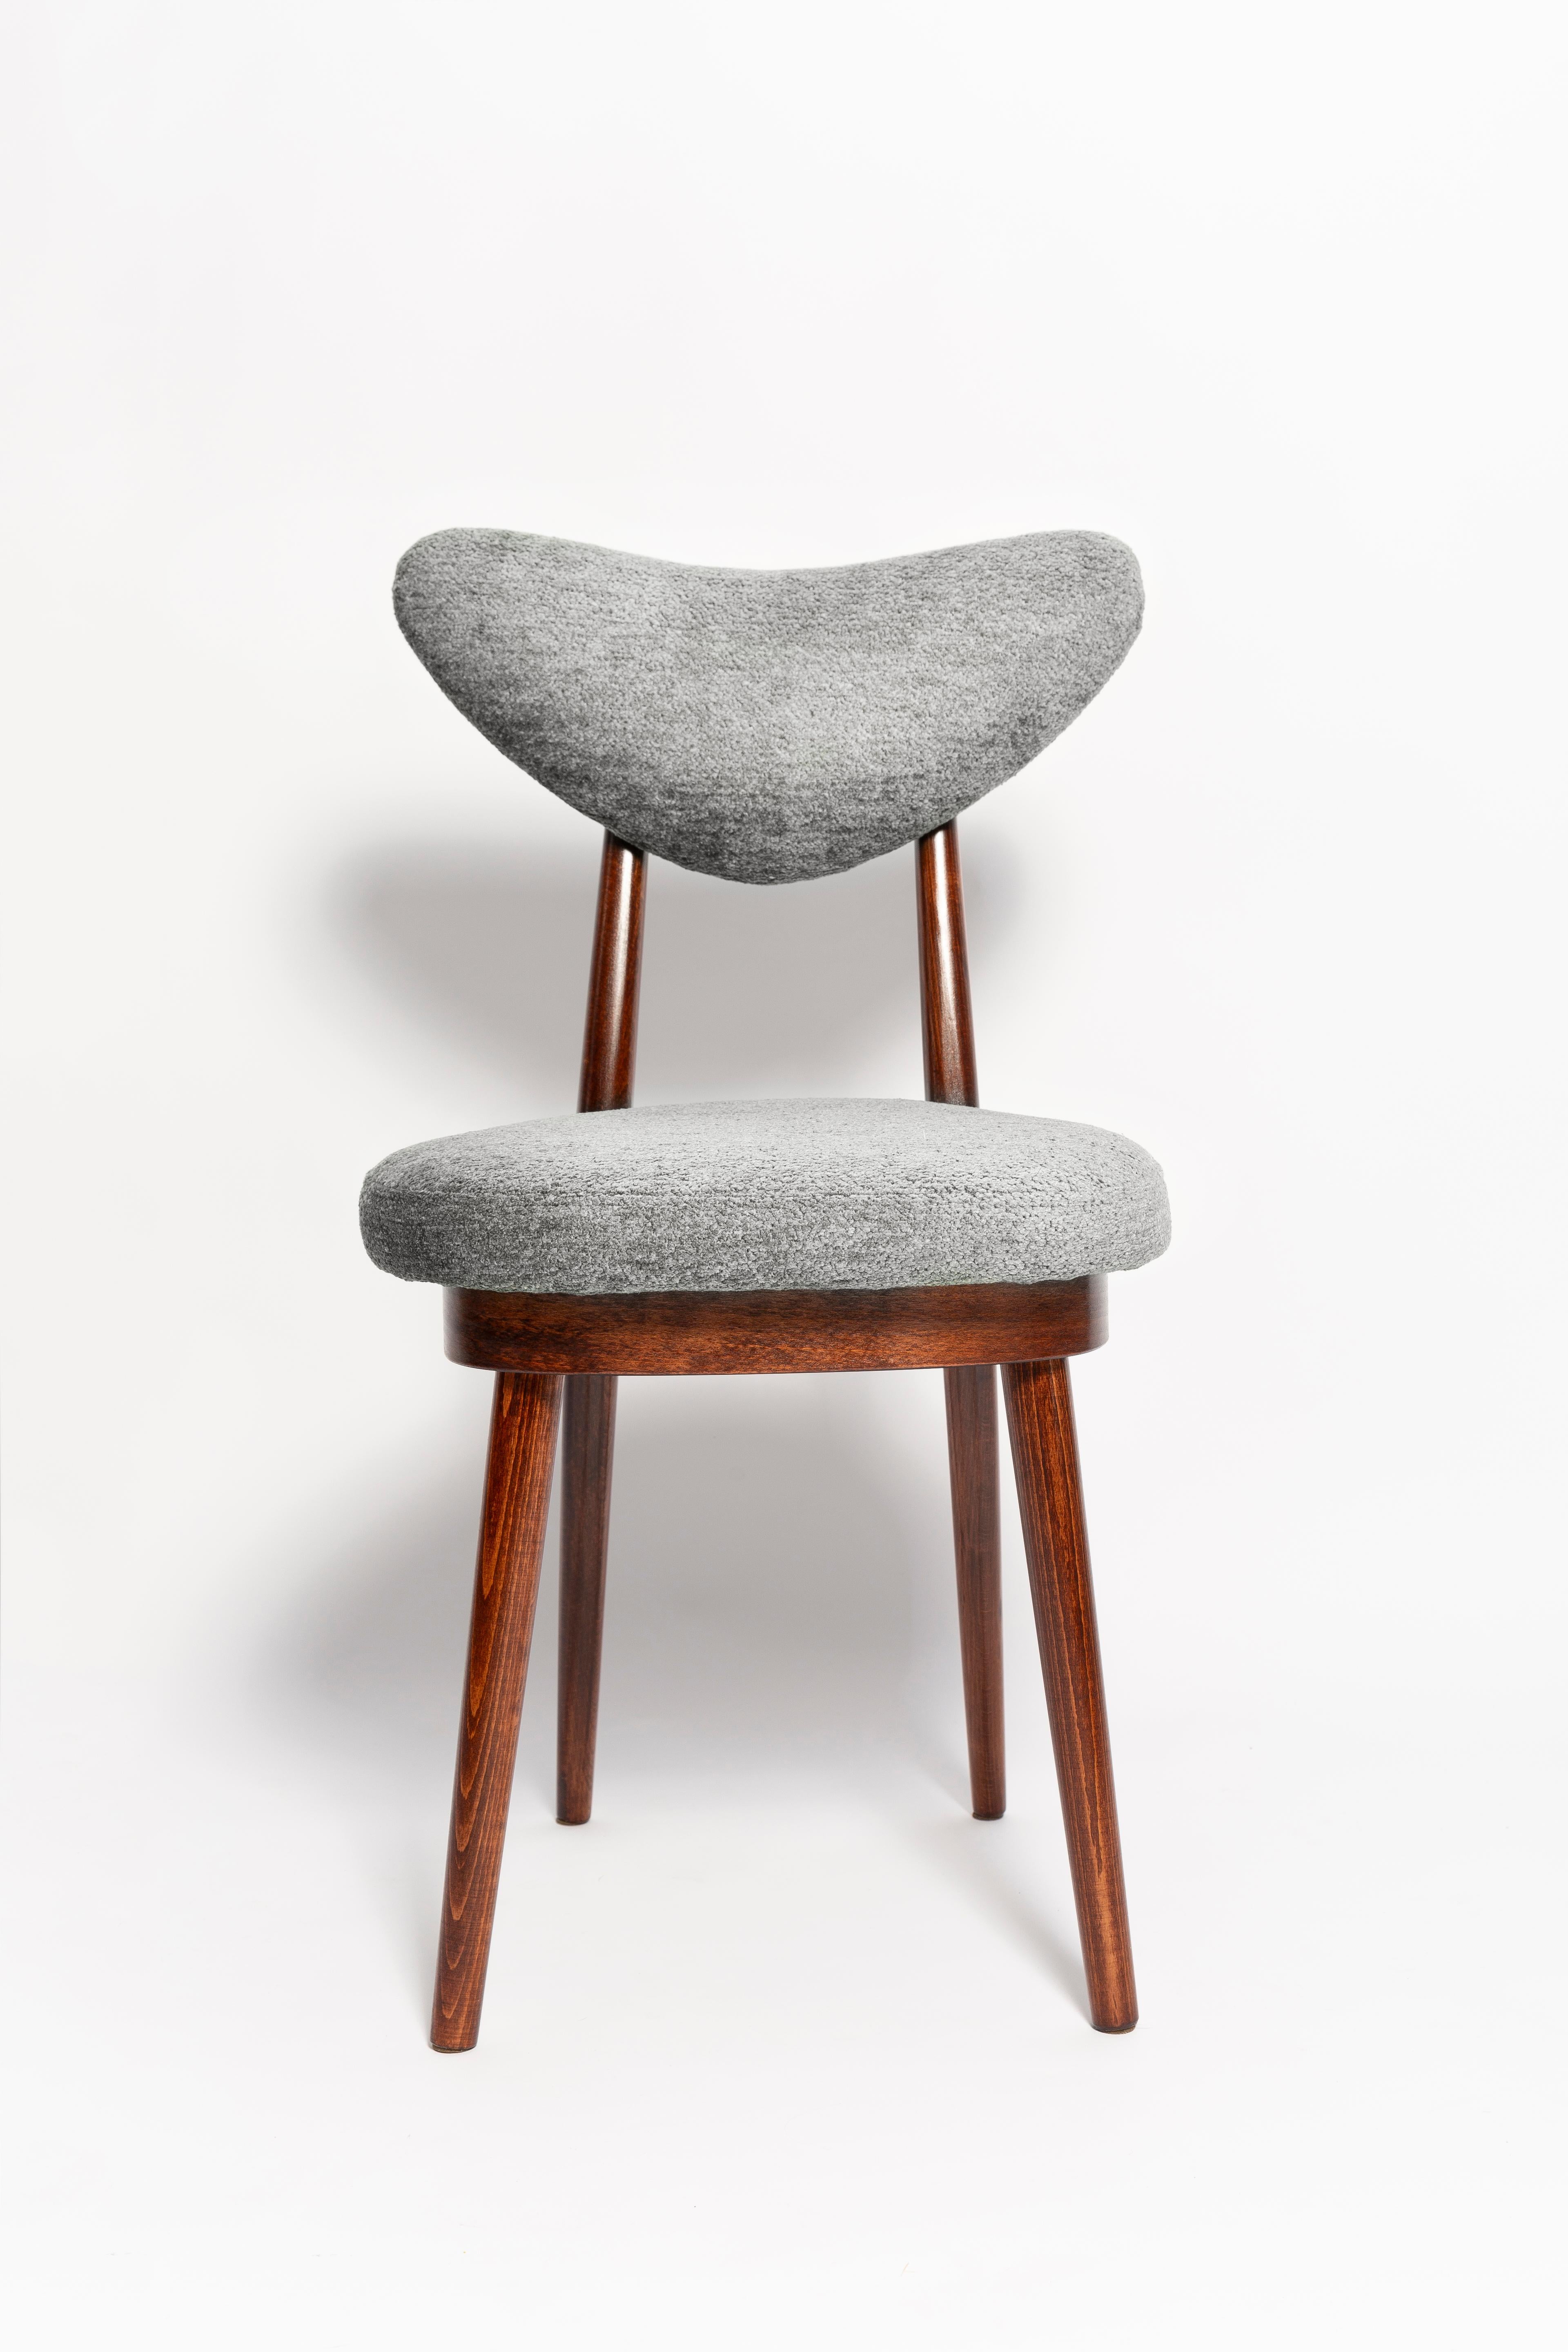 Mid Century Heart Chair and Stool, Gray Velvet, Dark Wood, Europe 1960s For Sale 1